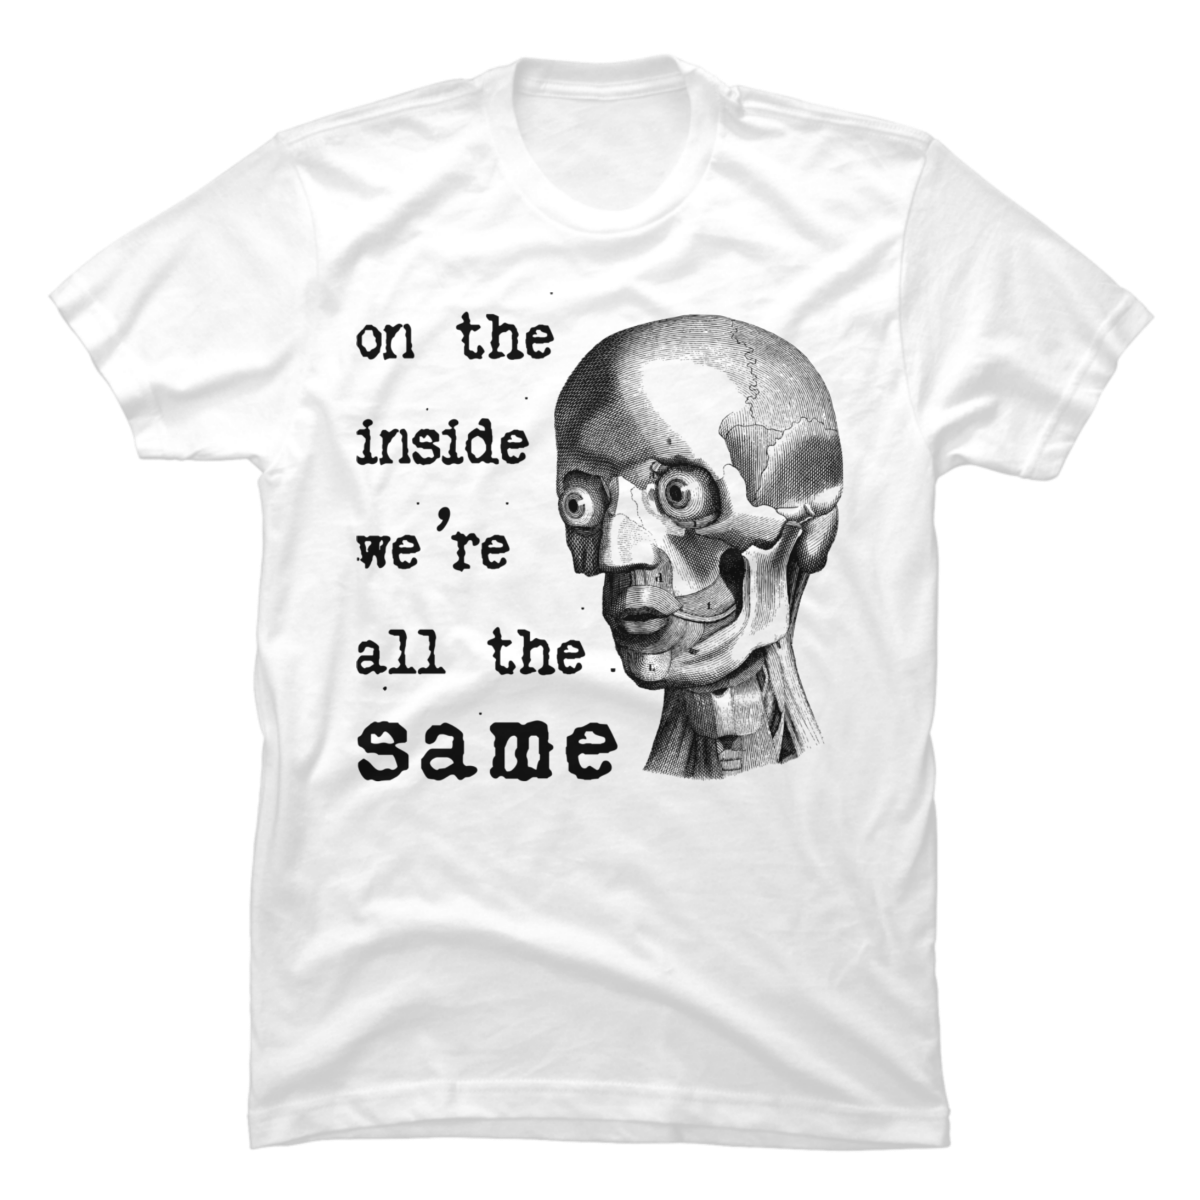 we're all human shirt